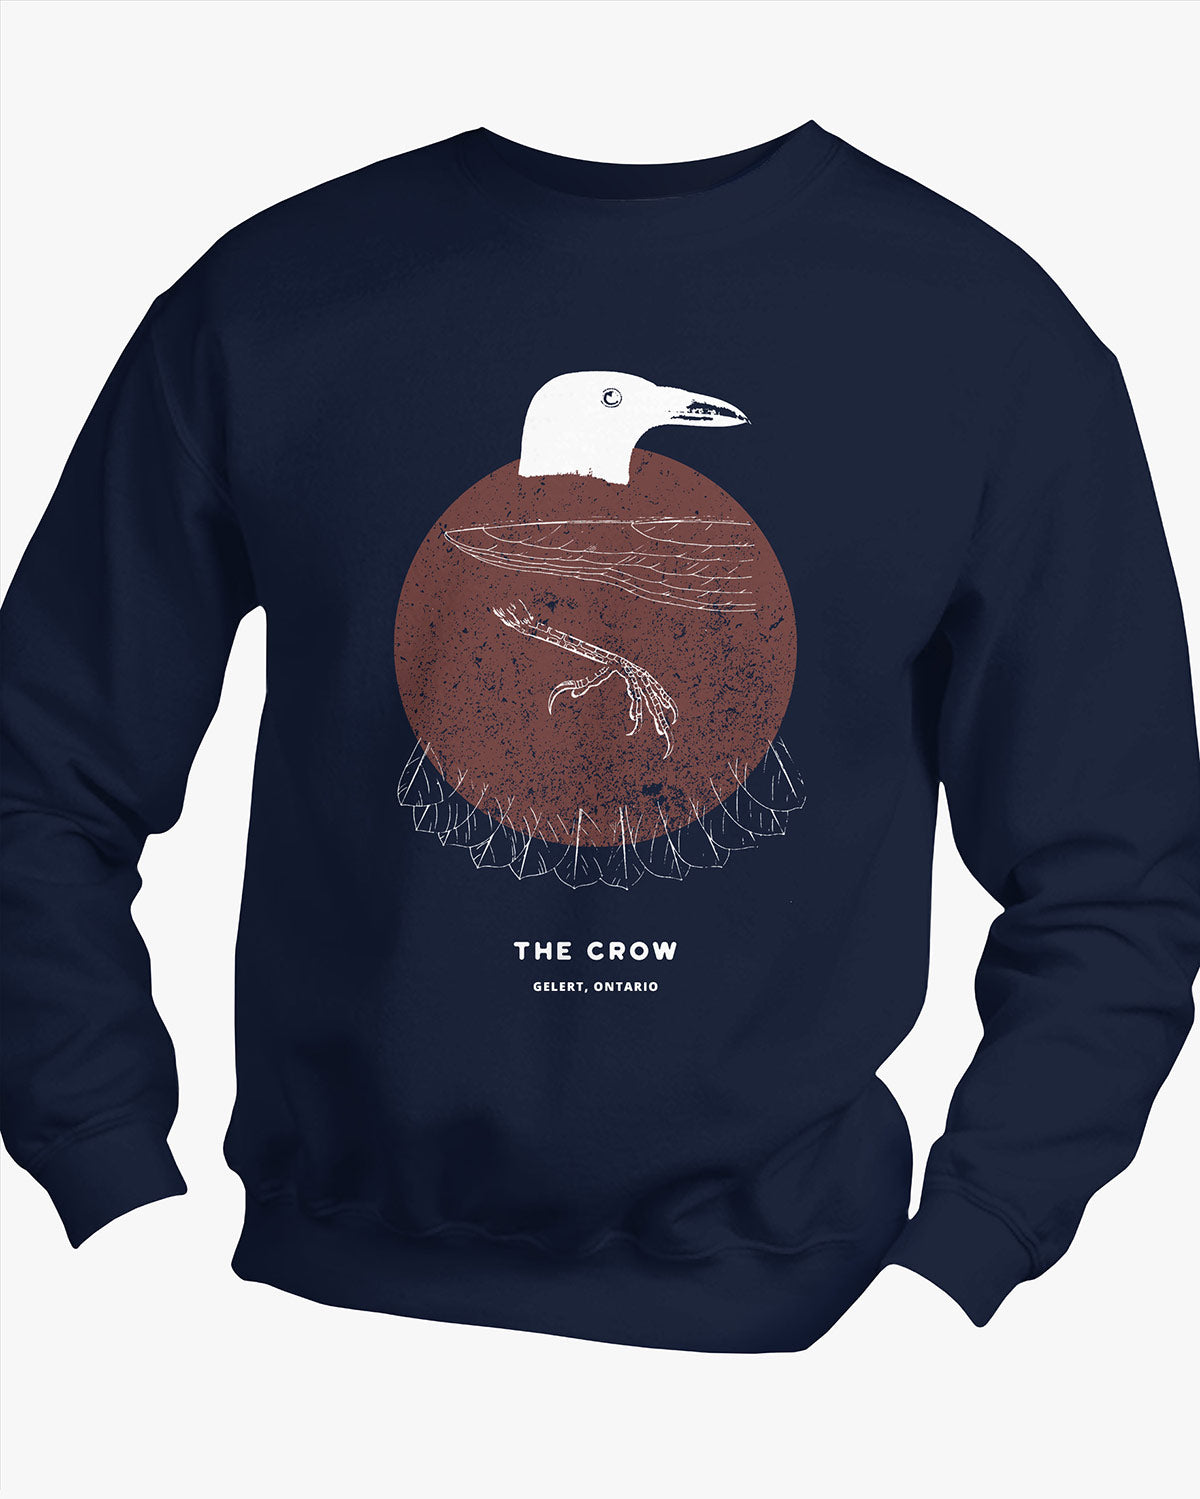 The Crow - Gelert - Sweater